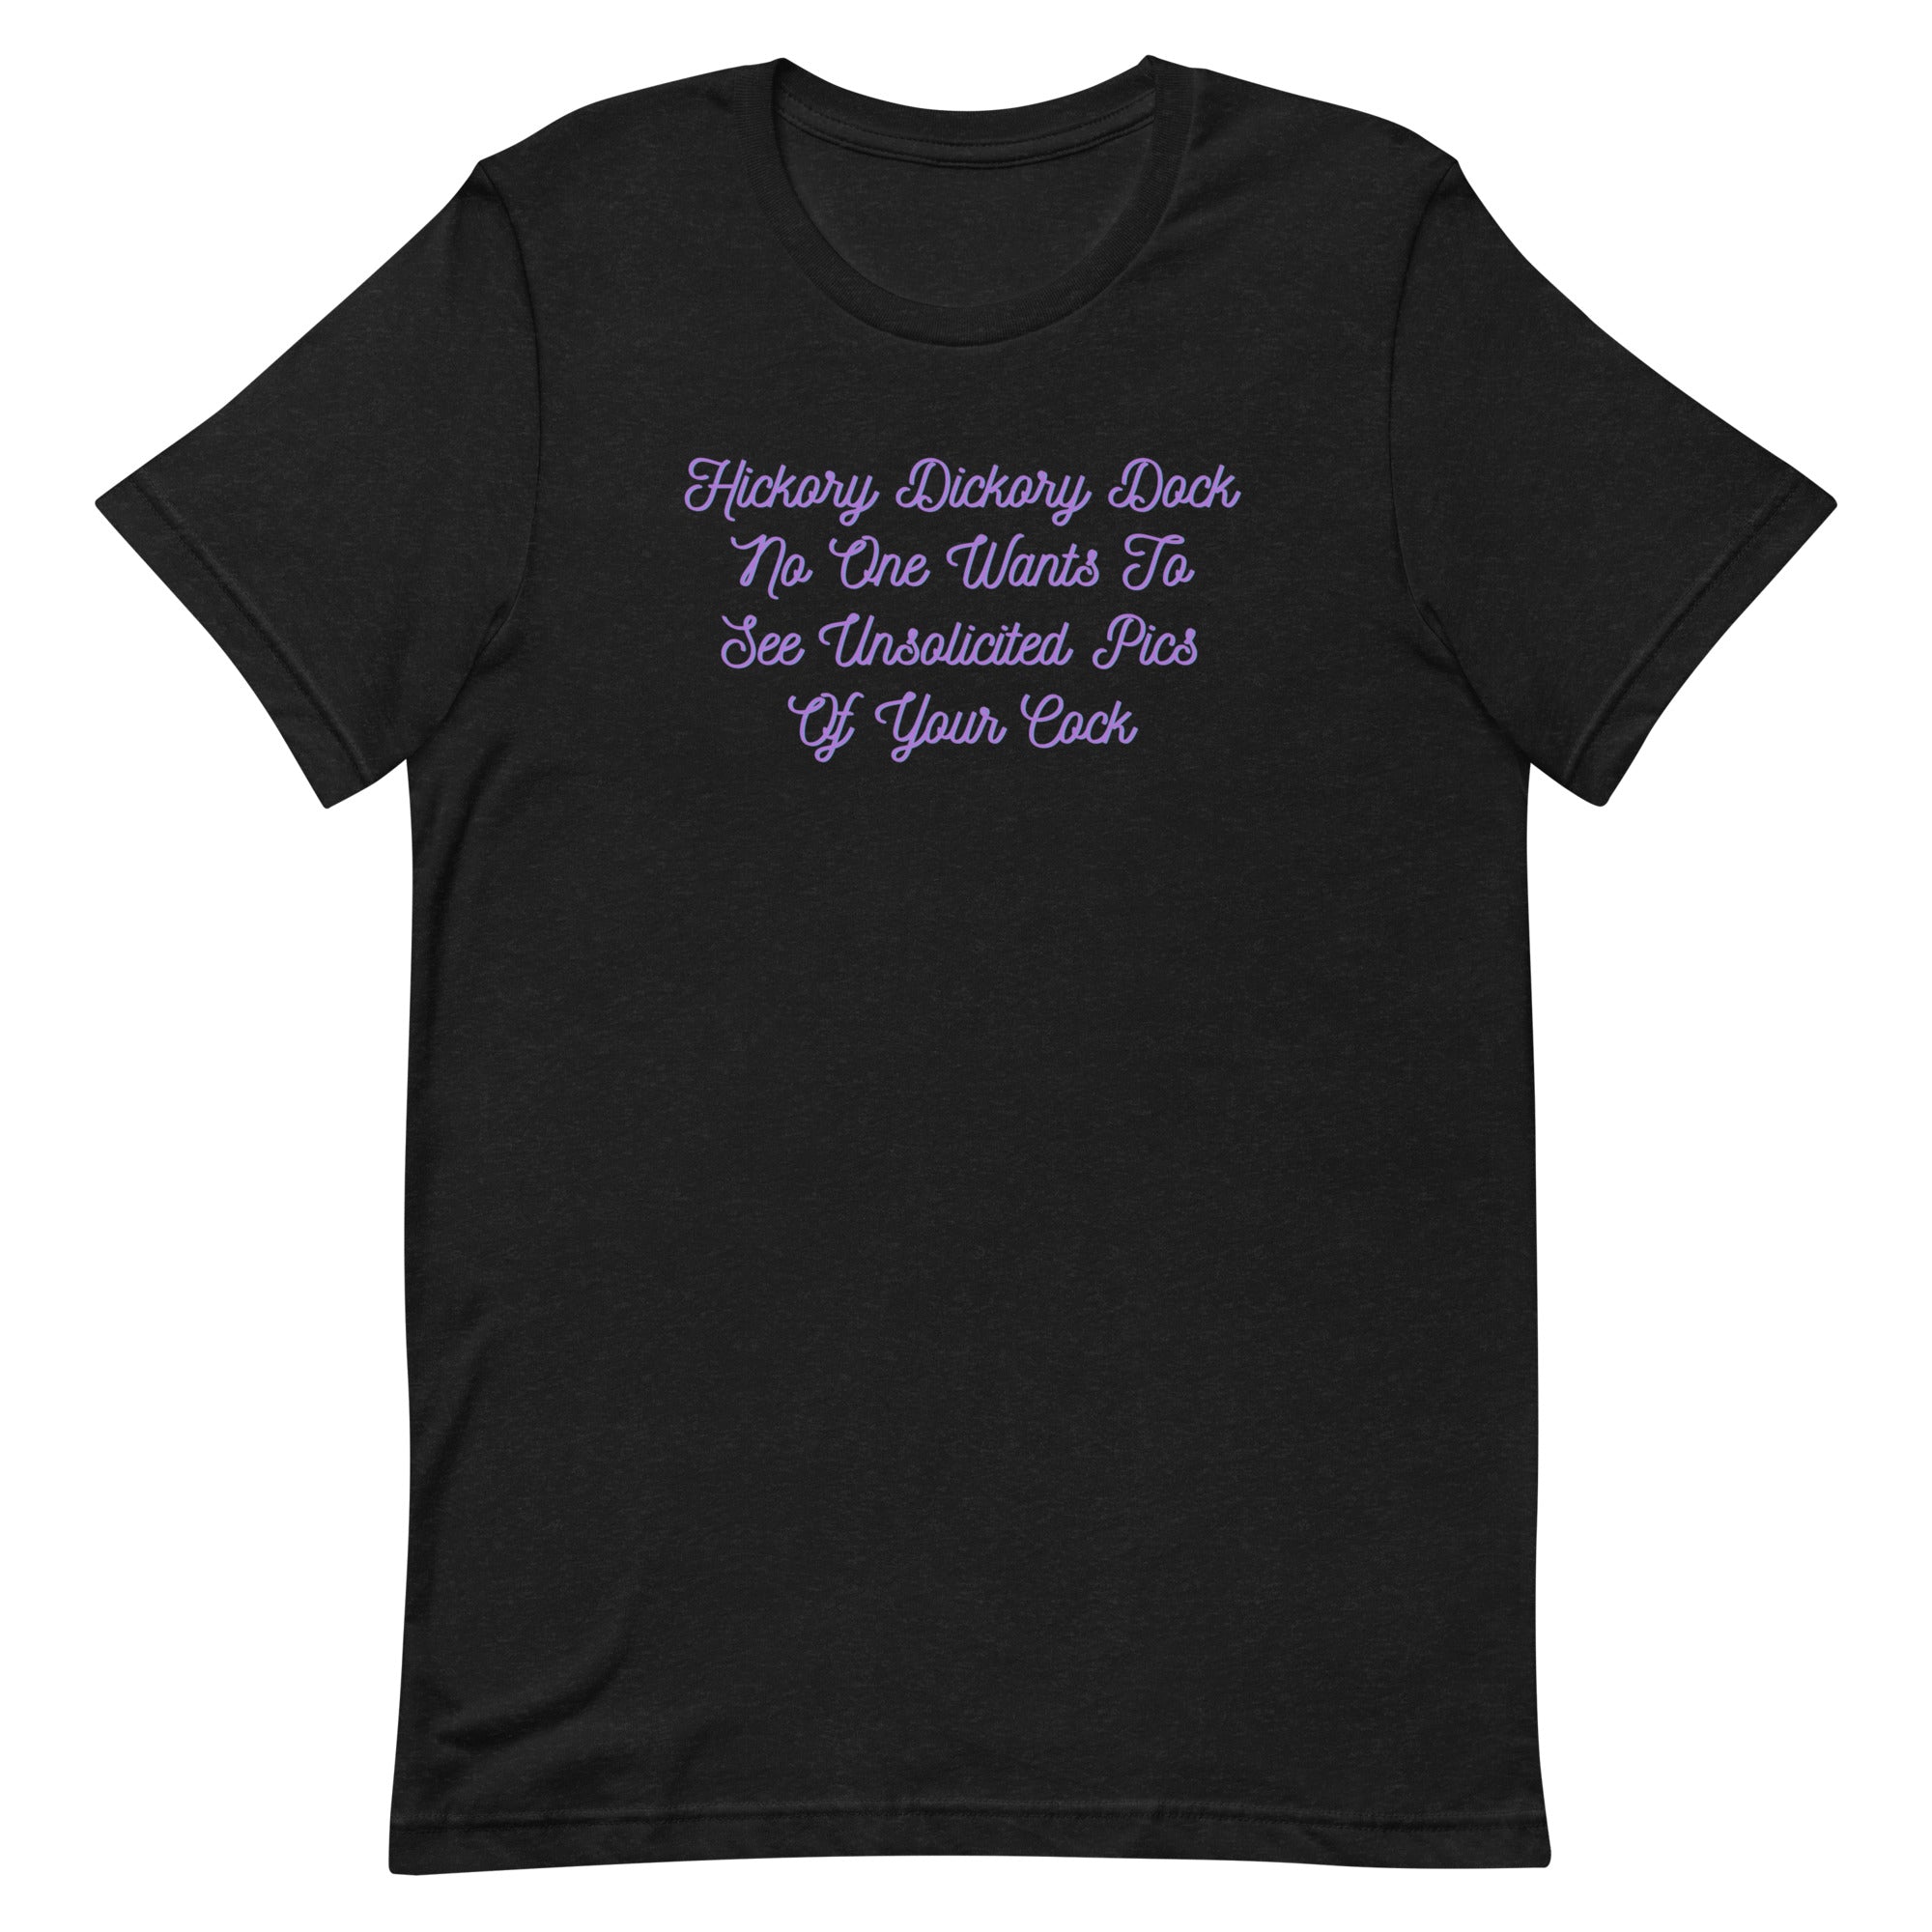 Hickory Dickory Dock Unisex Feminist T-shirt - Shop Women’s Rights T-shirts - Feminist Trash Store - Black